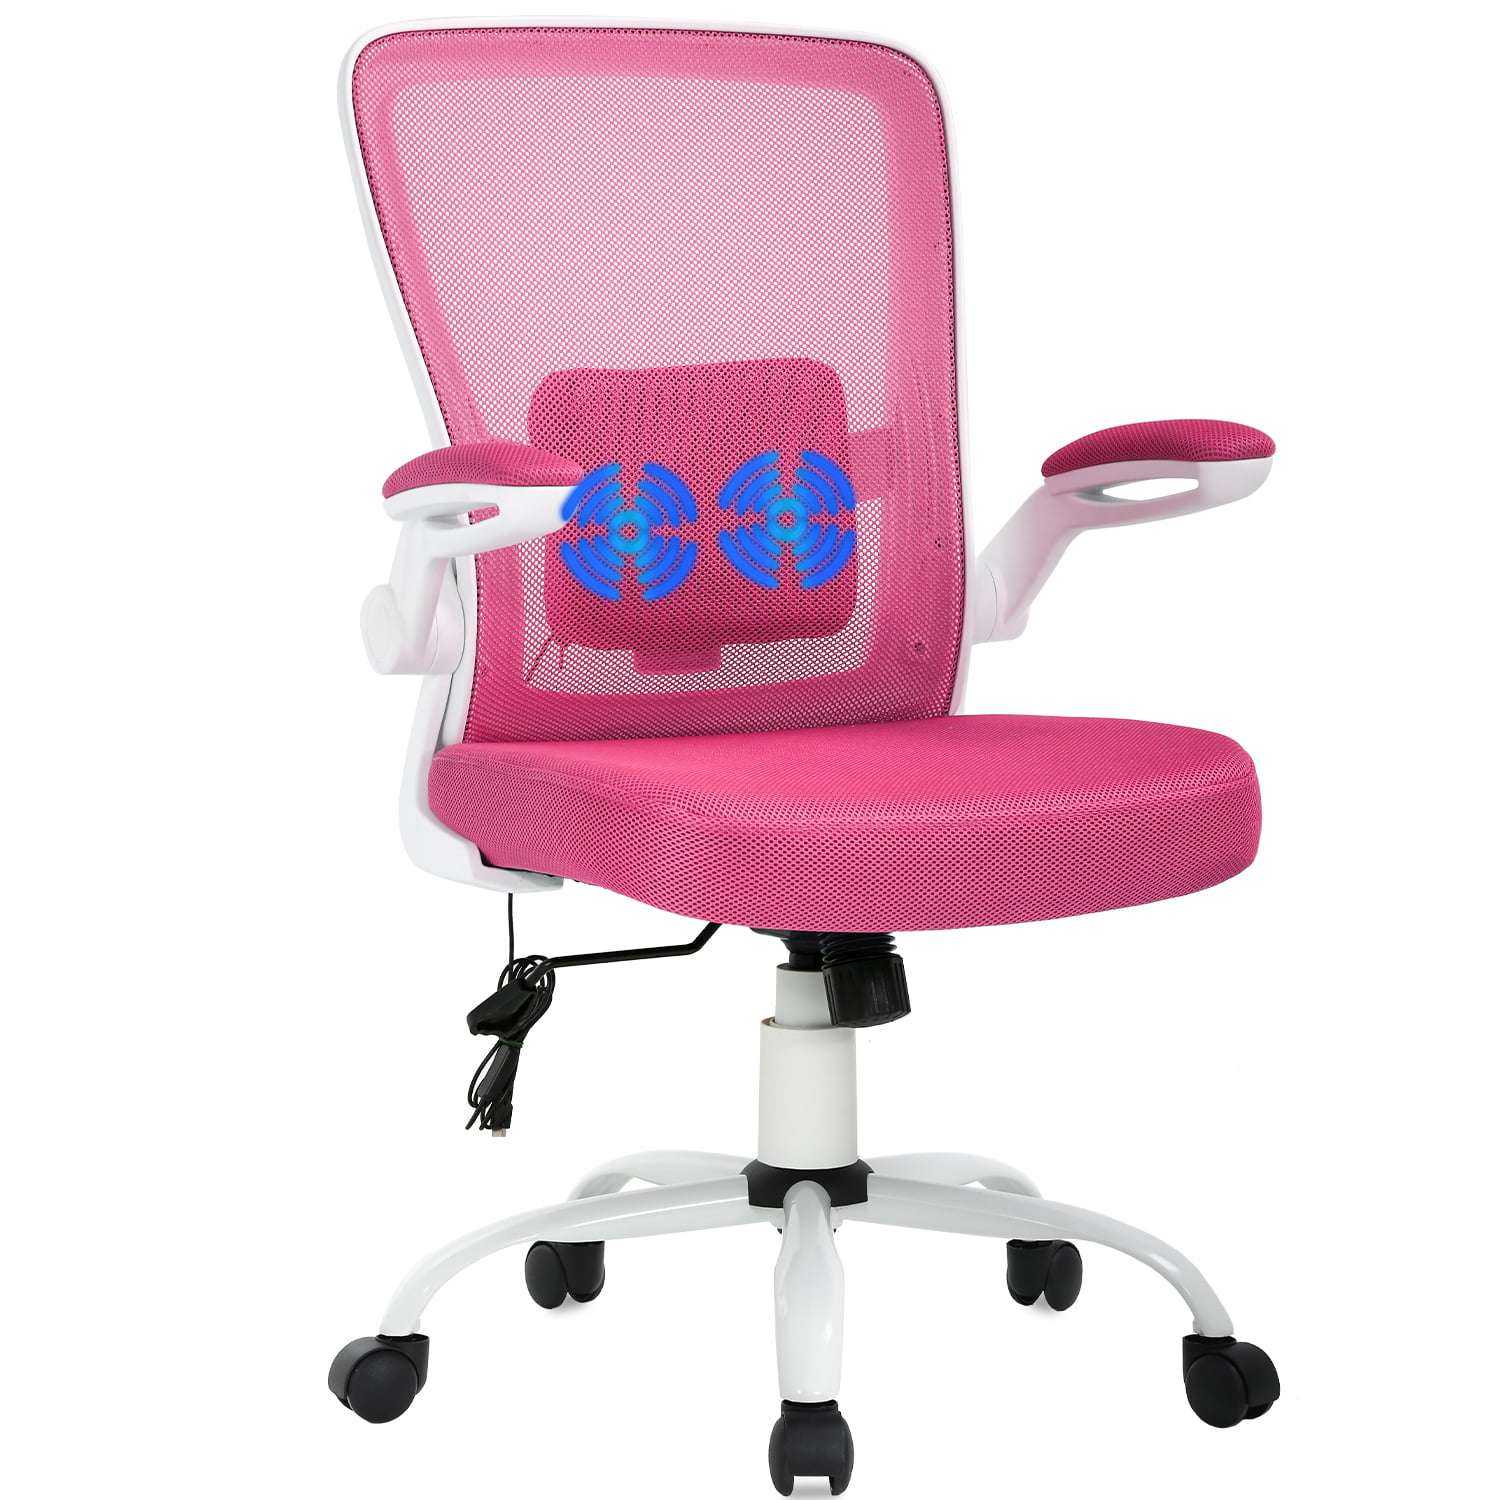 Home Office Chair Ergonomic Desk Chair Mesh Computer Chair Swivel